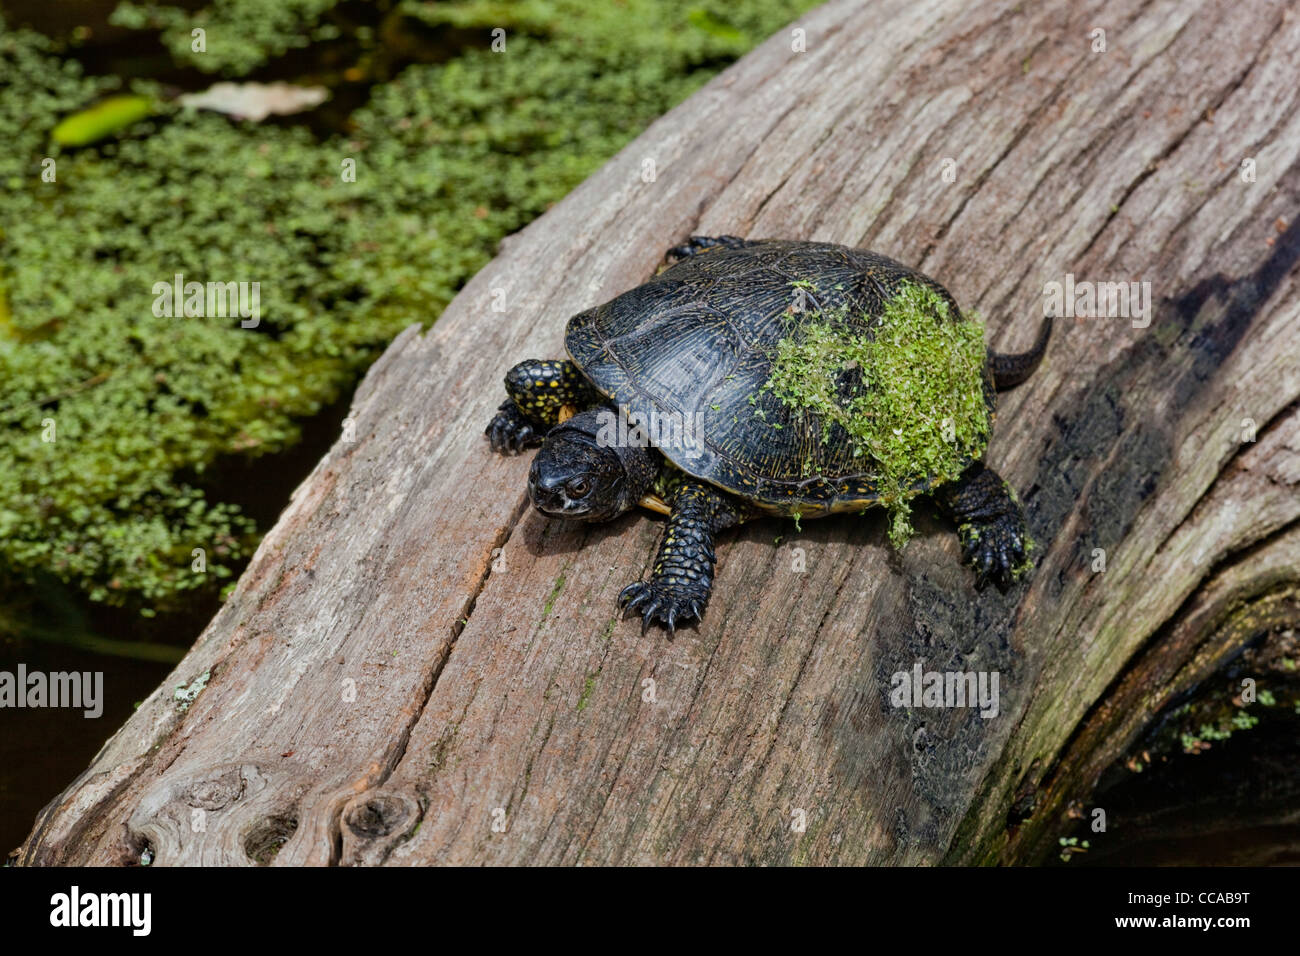 European Pond Tortoise (Emys orbicularis). Sun basking, with                       Duckweed (Lemna sp. ).on carapace. Stock Photo